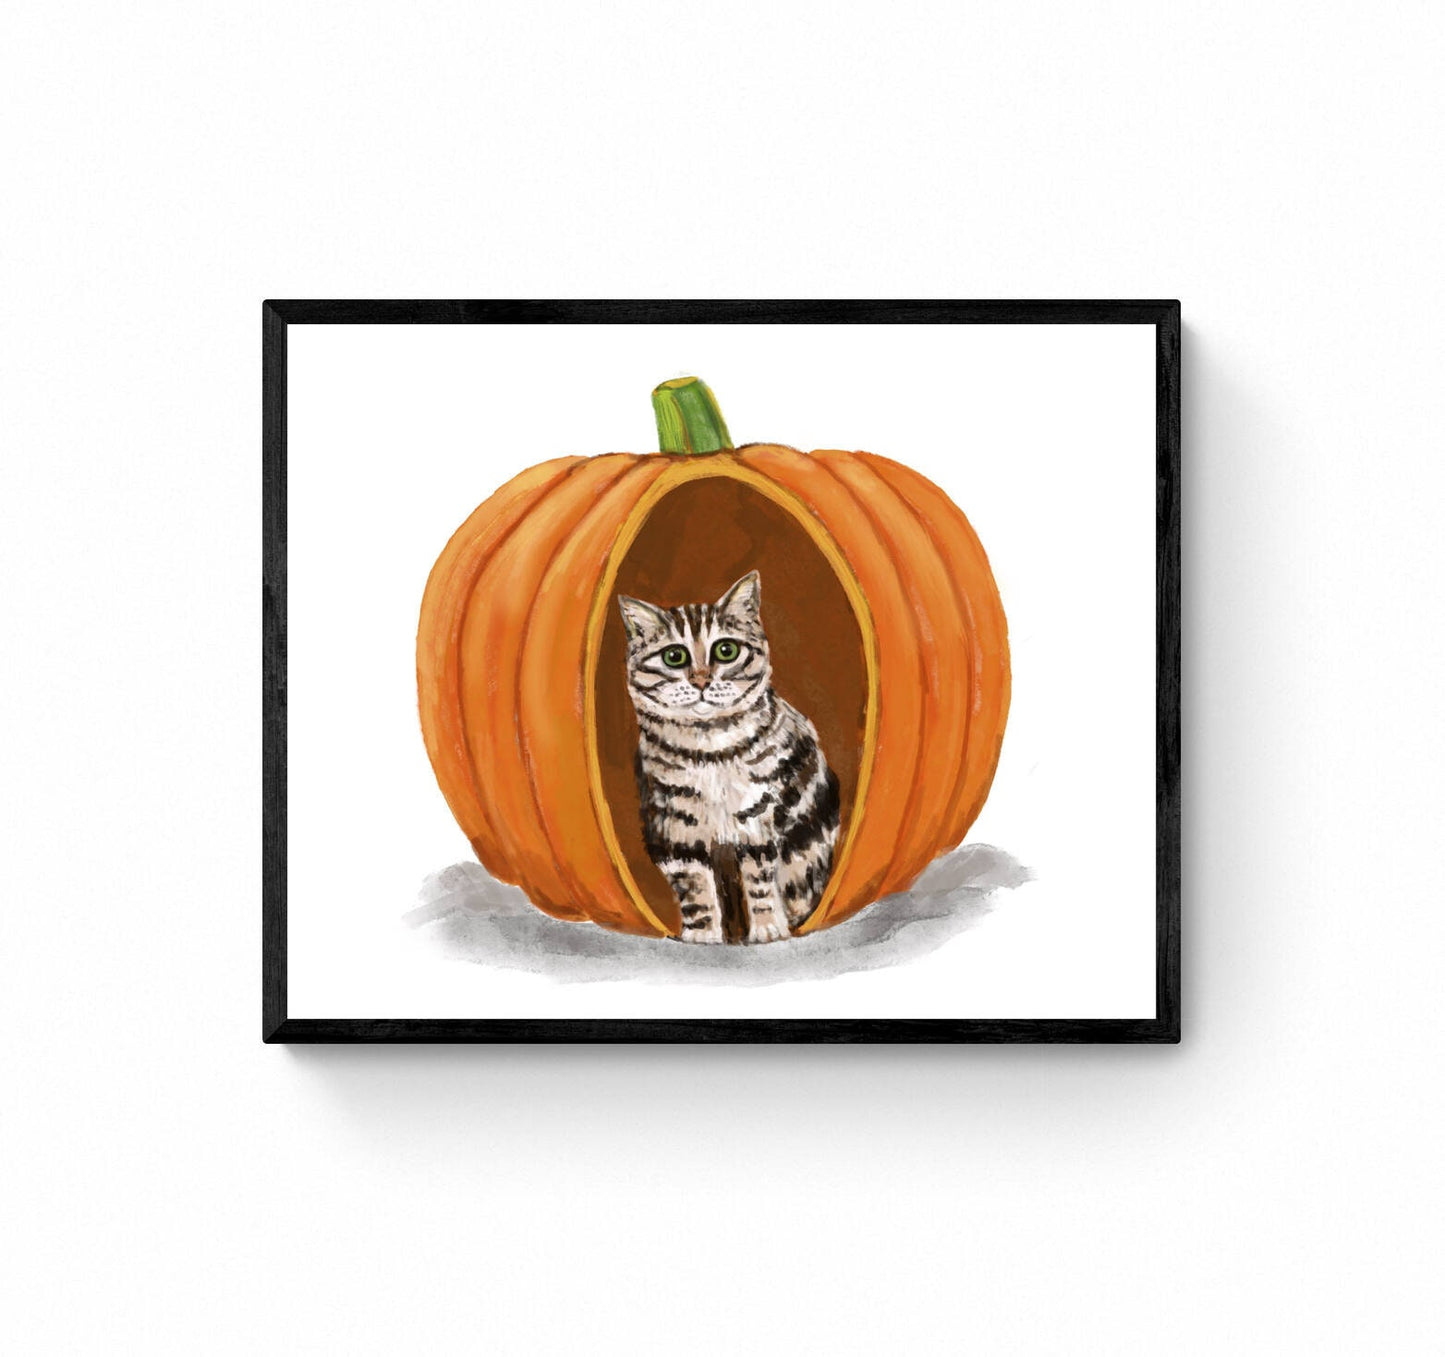 Gray Tabby Cat in Pumpkin Print, Halloween Cat Painting, Gray Cat Hiding in Pumpkin Portrait, Holiday Wall Art, Tabby Cat With Big Eyes